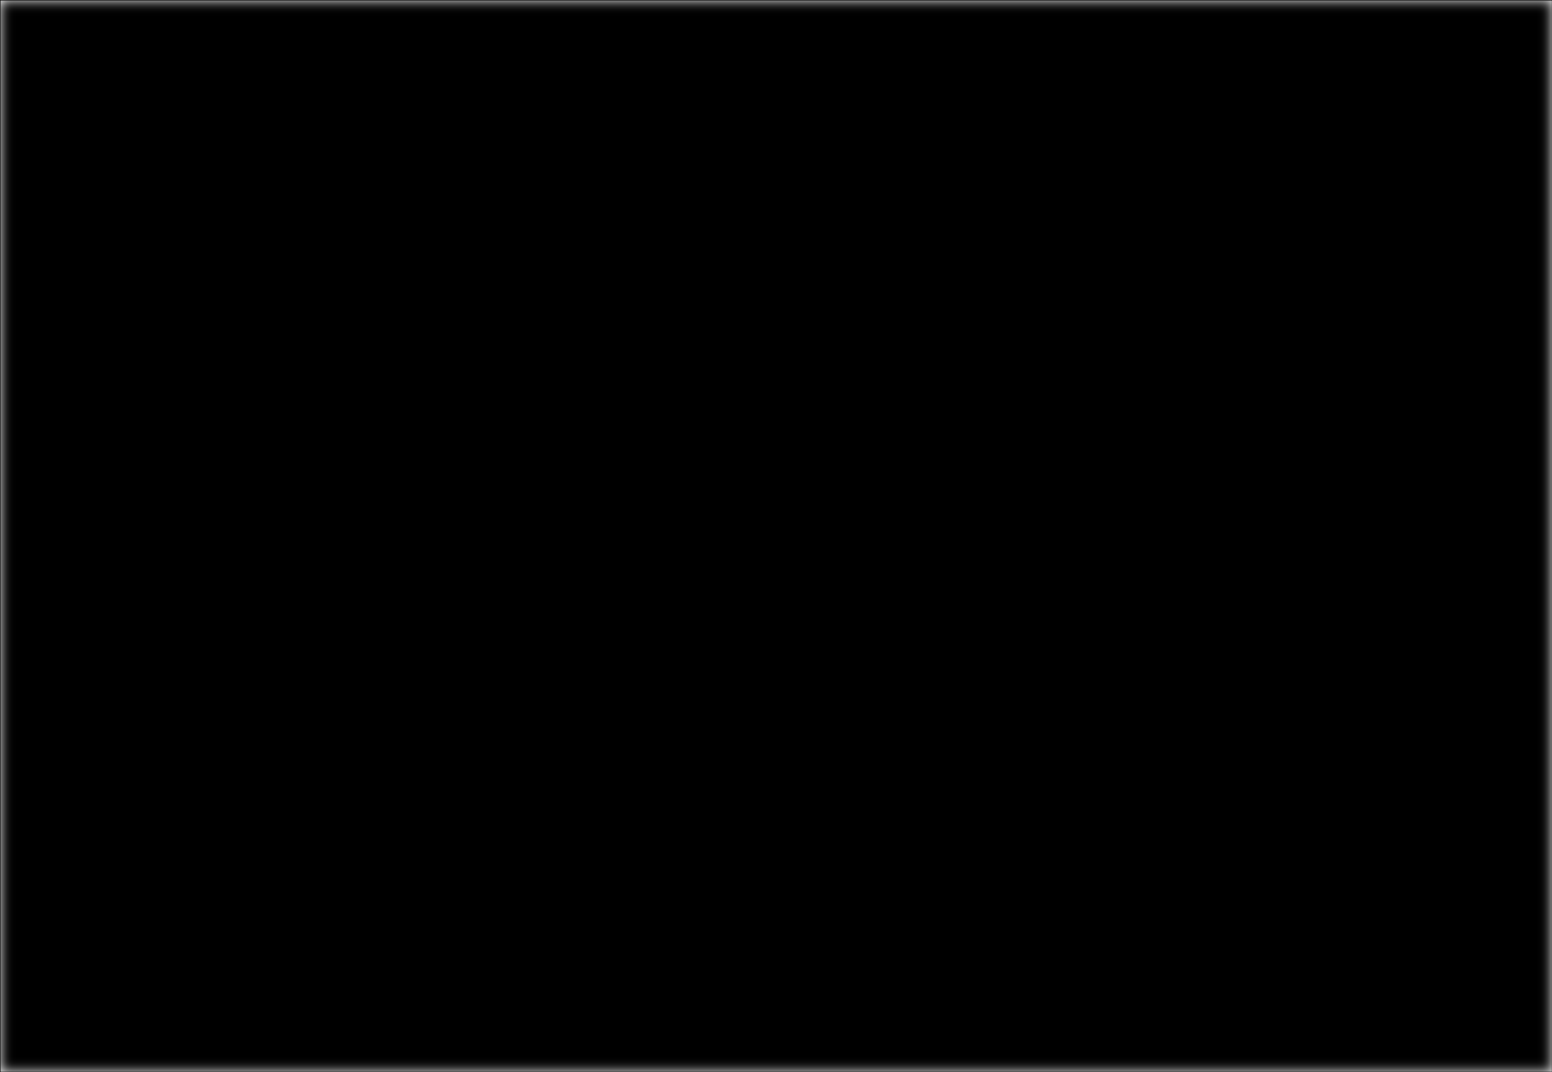 culture extract, oenothera biennis oil, triticum vulgare germ oil, boswellia serrata oil, rosa centifolia flower oil, rosa rubiginosa seed oil, citrus aurantium amara flower oil, cymbopogon martini